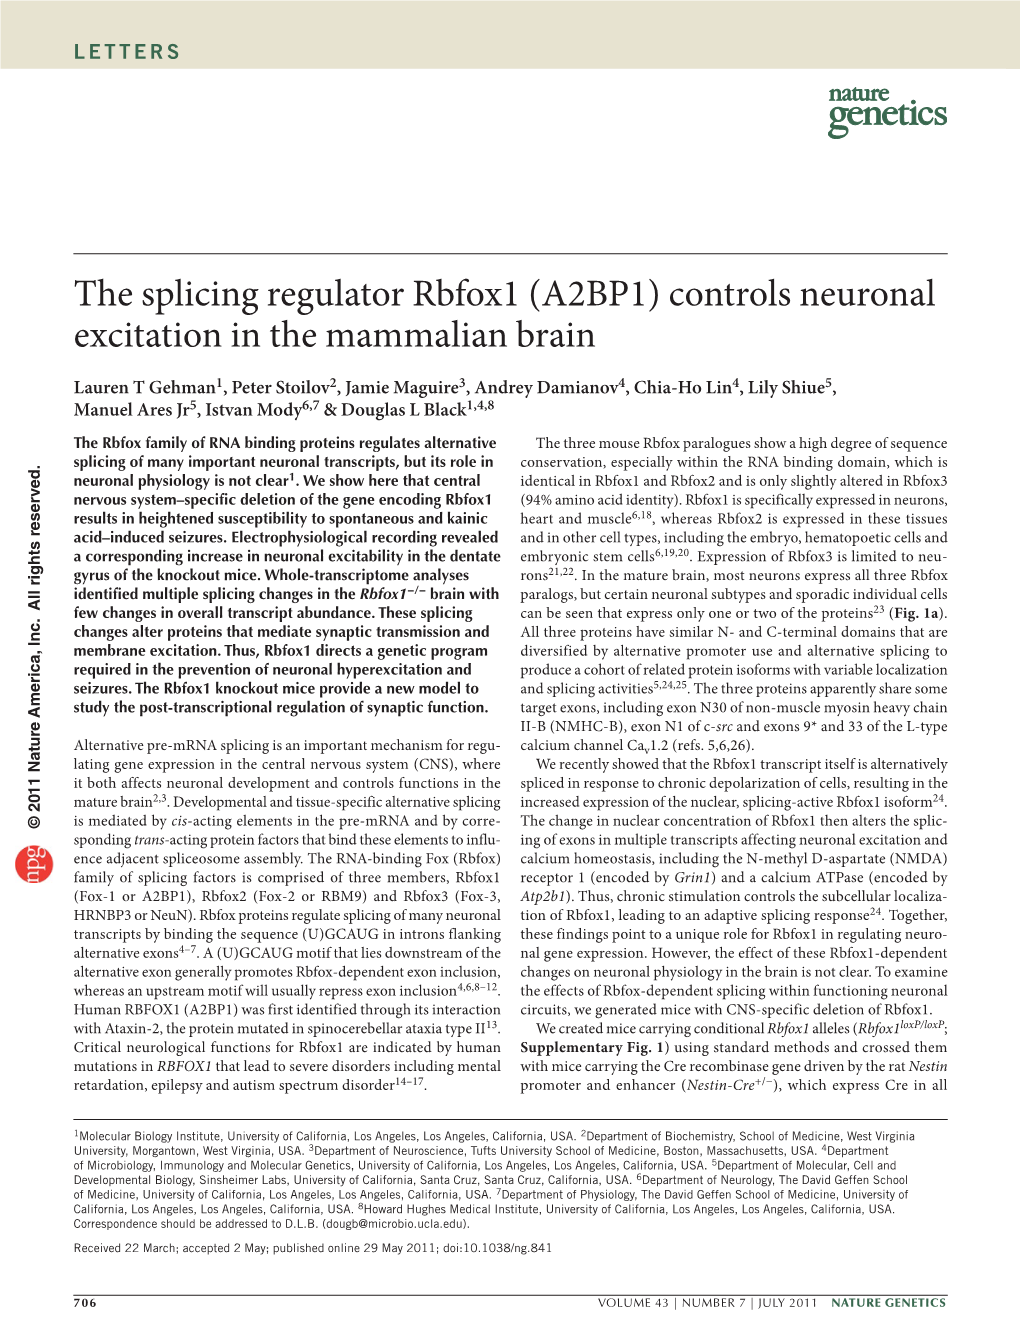 The Splicing Regulator Rbfox1 (A2BP1) Controls Neuronal Excitation in the Mammalian Brain